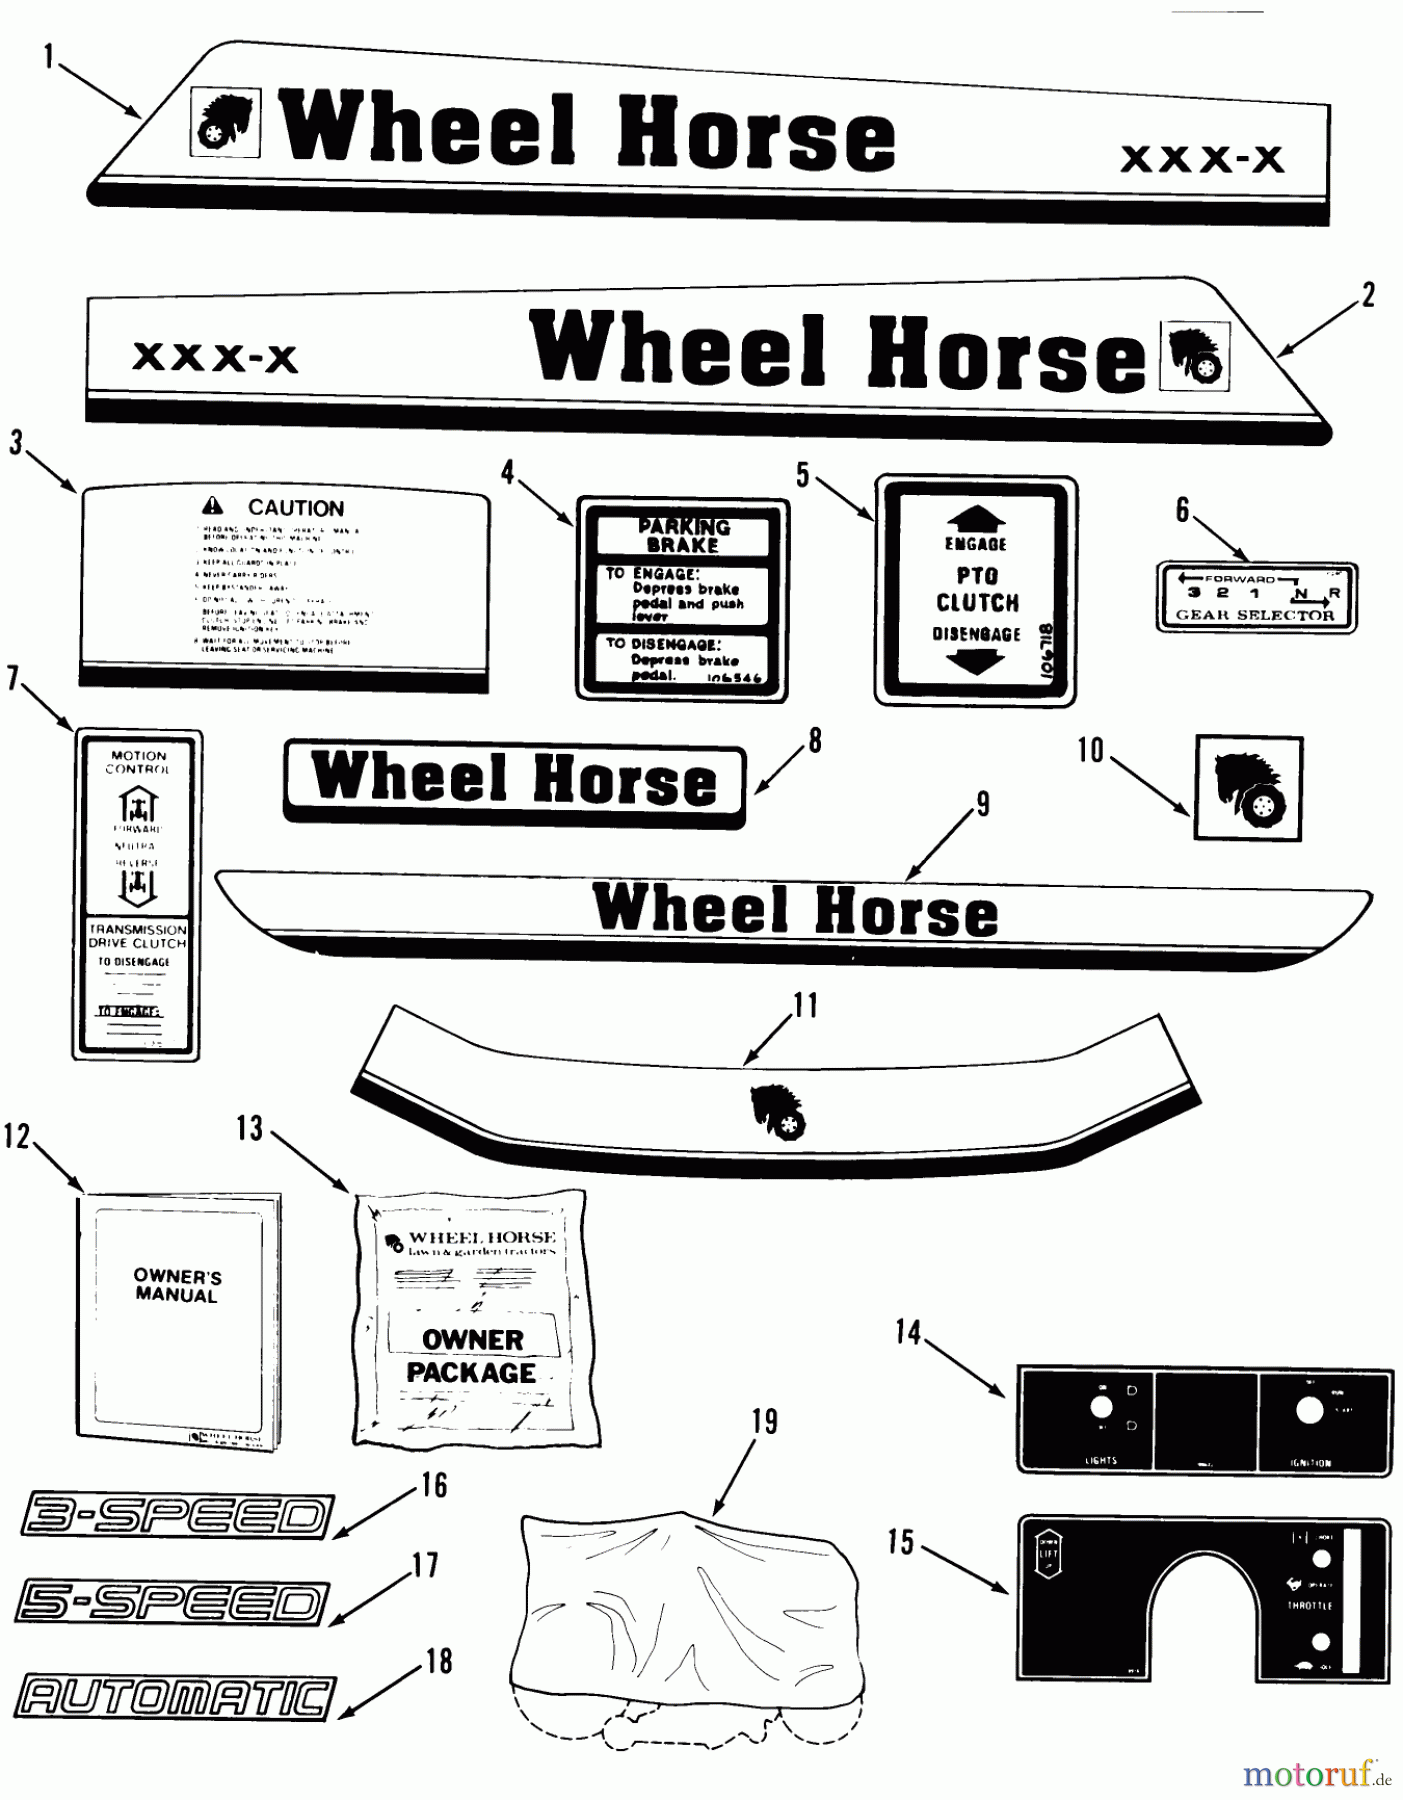  Toro Neu Mowers, Lawn & Garden Tractor Seite 1 22-11BE01 (211-A) - Toro 211-A Tractor, 1985 DECALS, MISCELLANEOUS